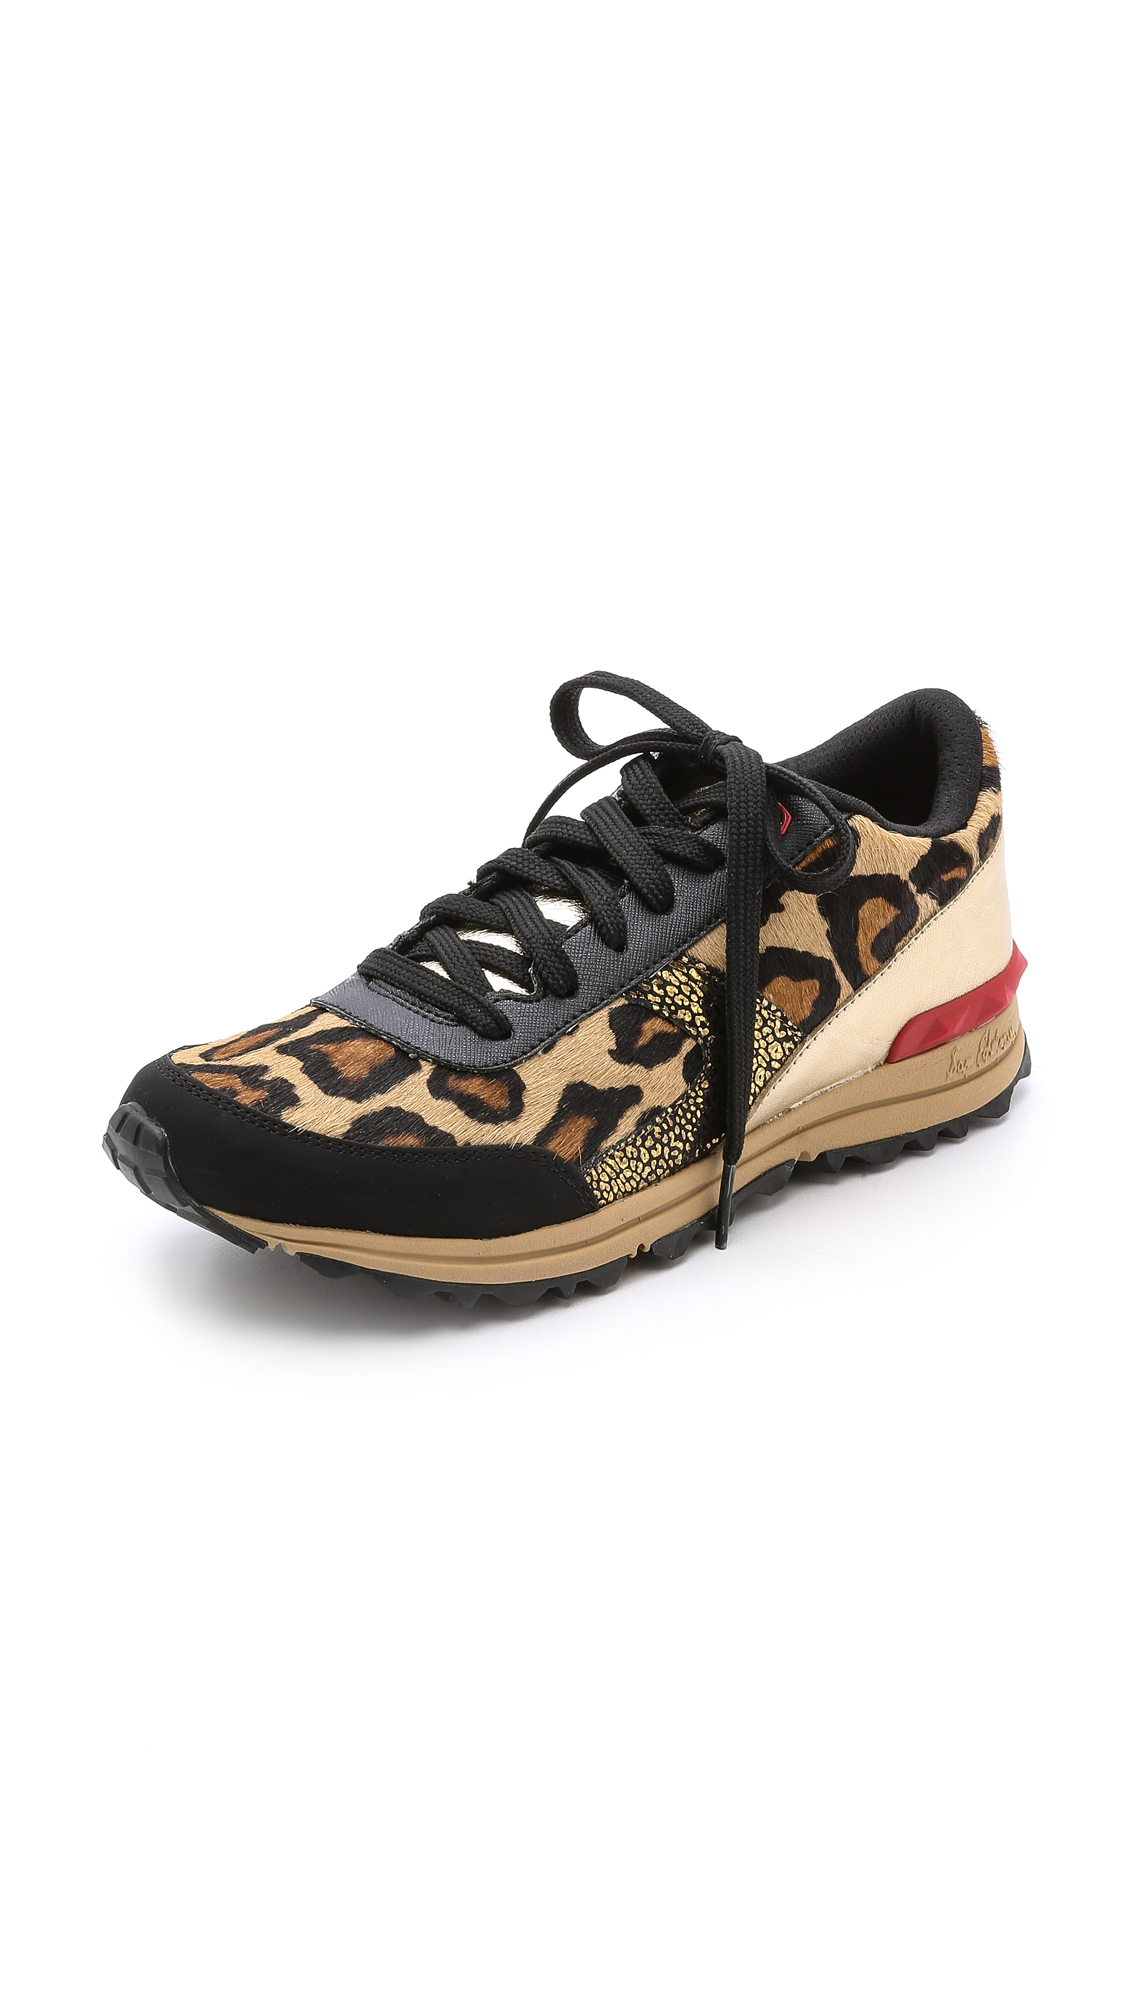 Sam Edelman Dax Jogging Sneakers - Black/Gold Leopard - Lyst